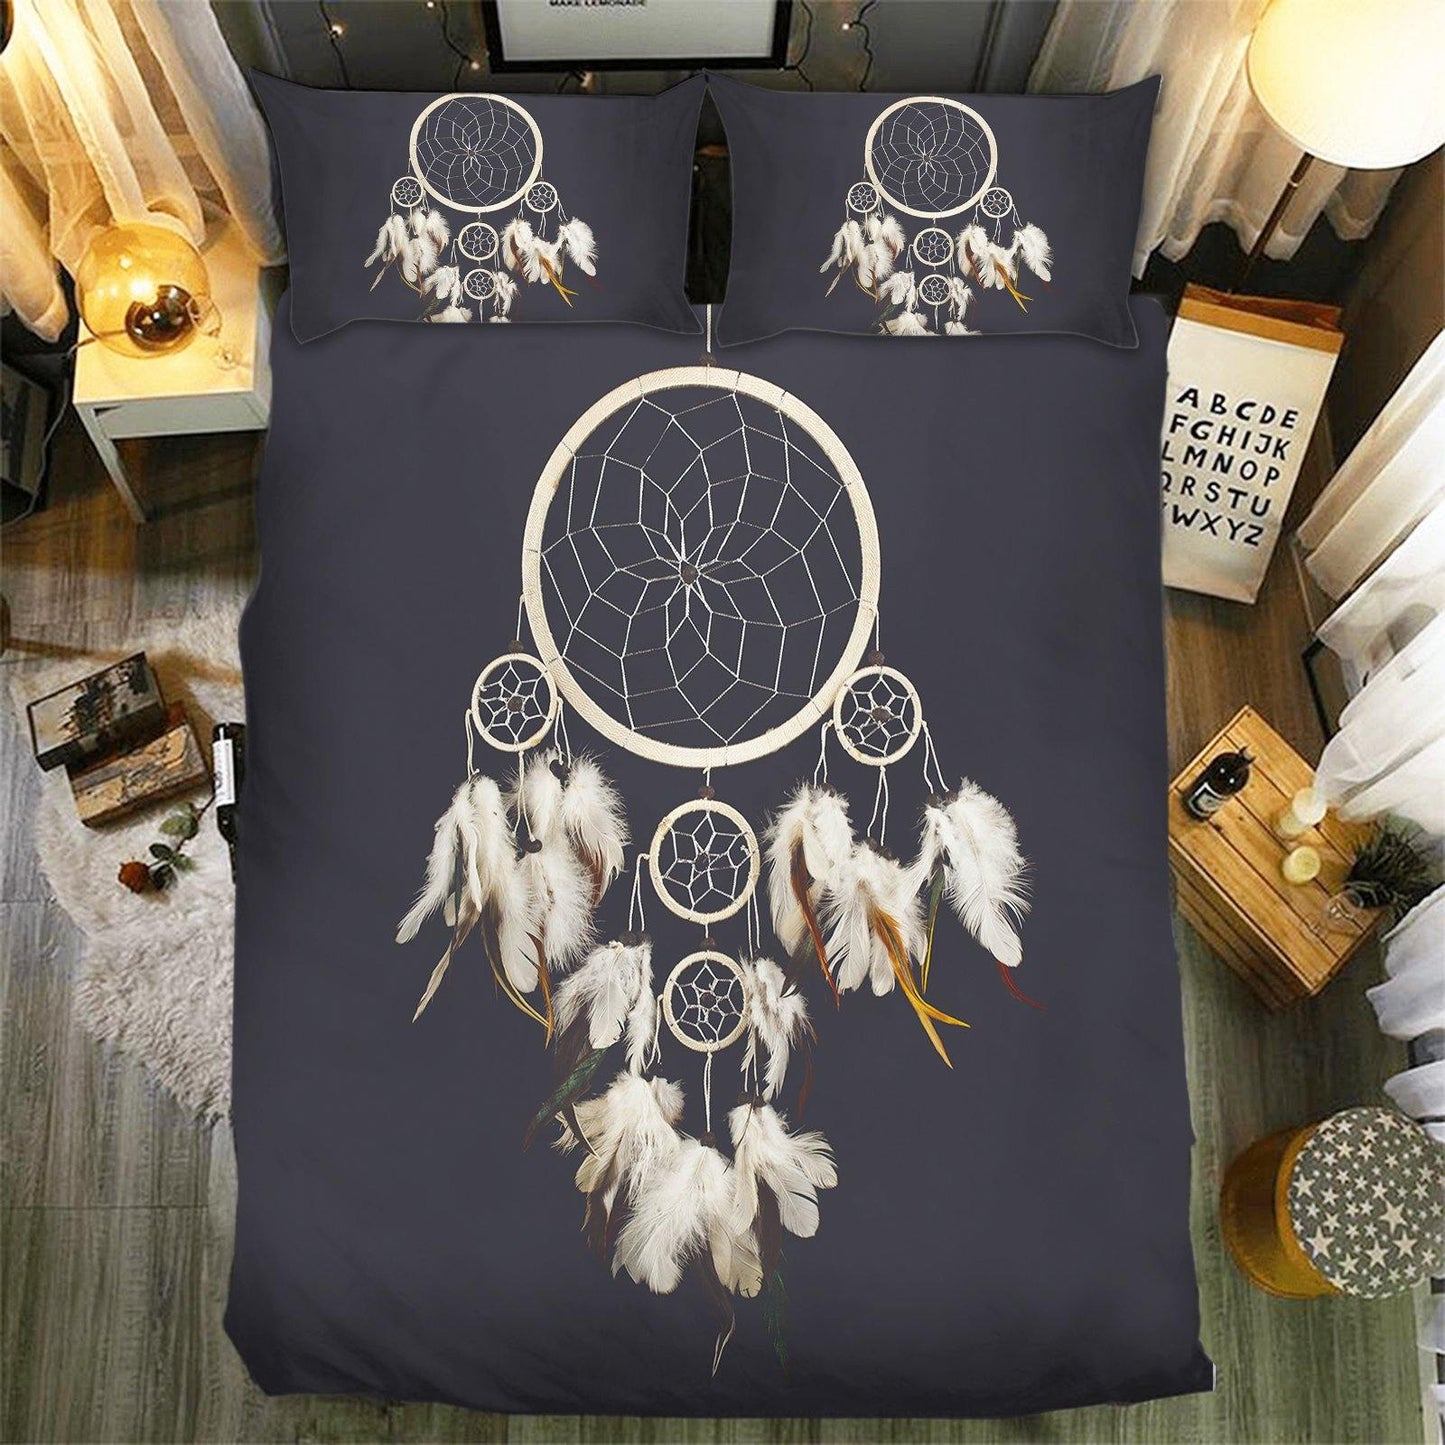 WONGS BEDDING Oversized feather pendant printed bedding kit - Wongs bedding